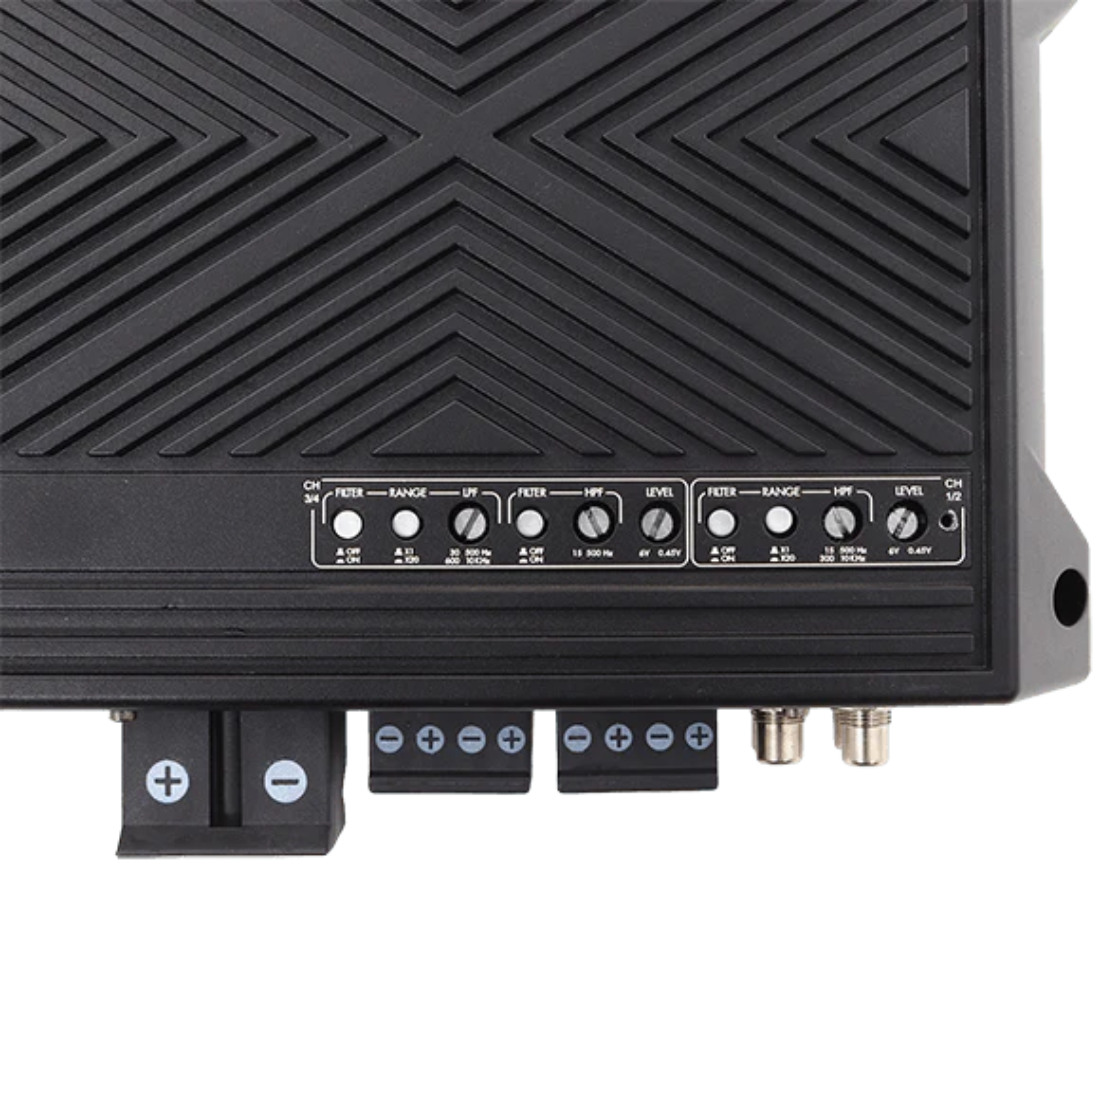 Sundown Audio SDX-100.4 4-Channel 100W at 4-Ohms Class-D Car Amplifier